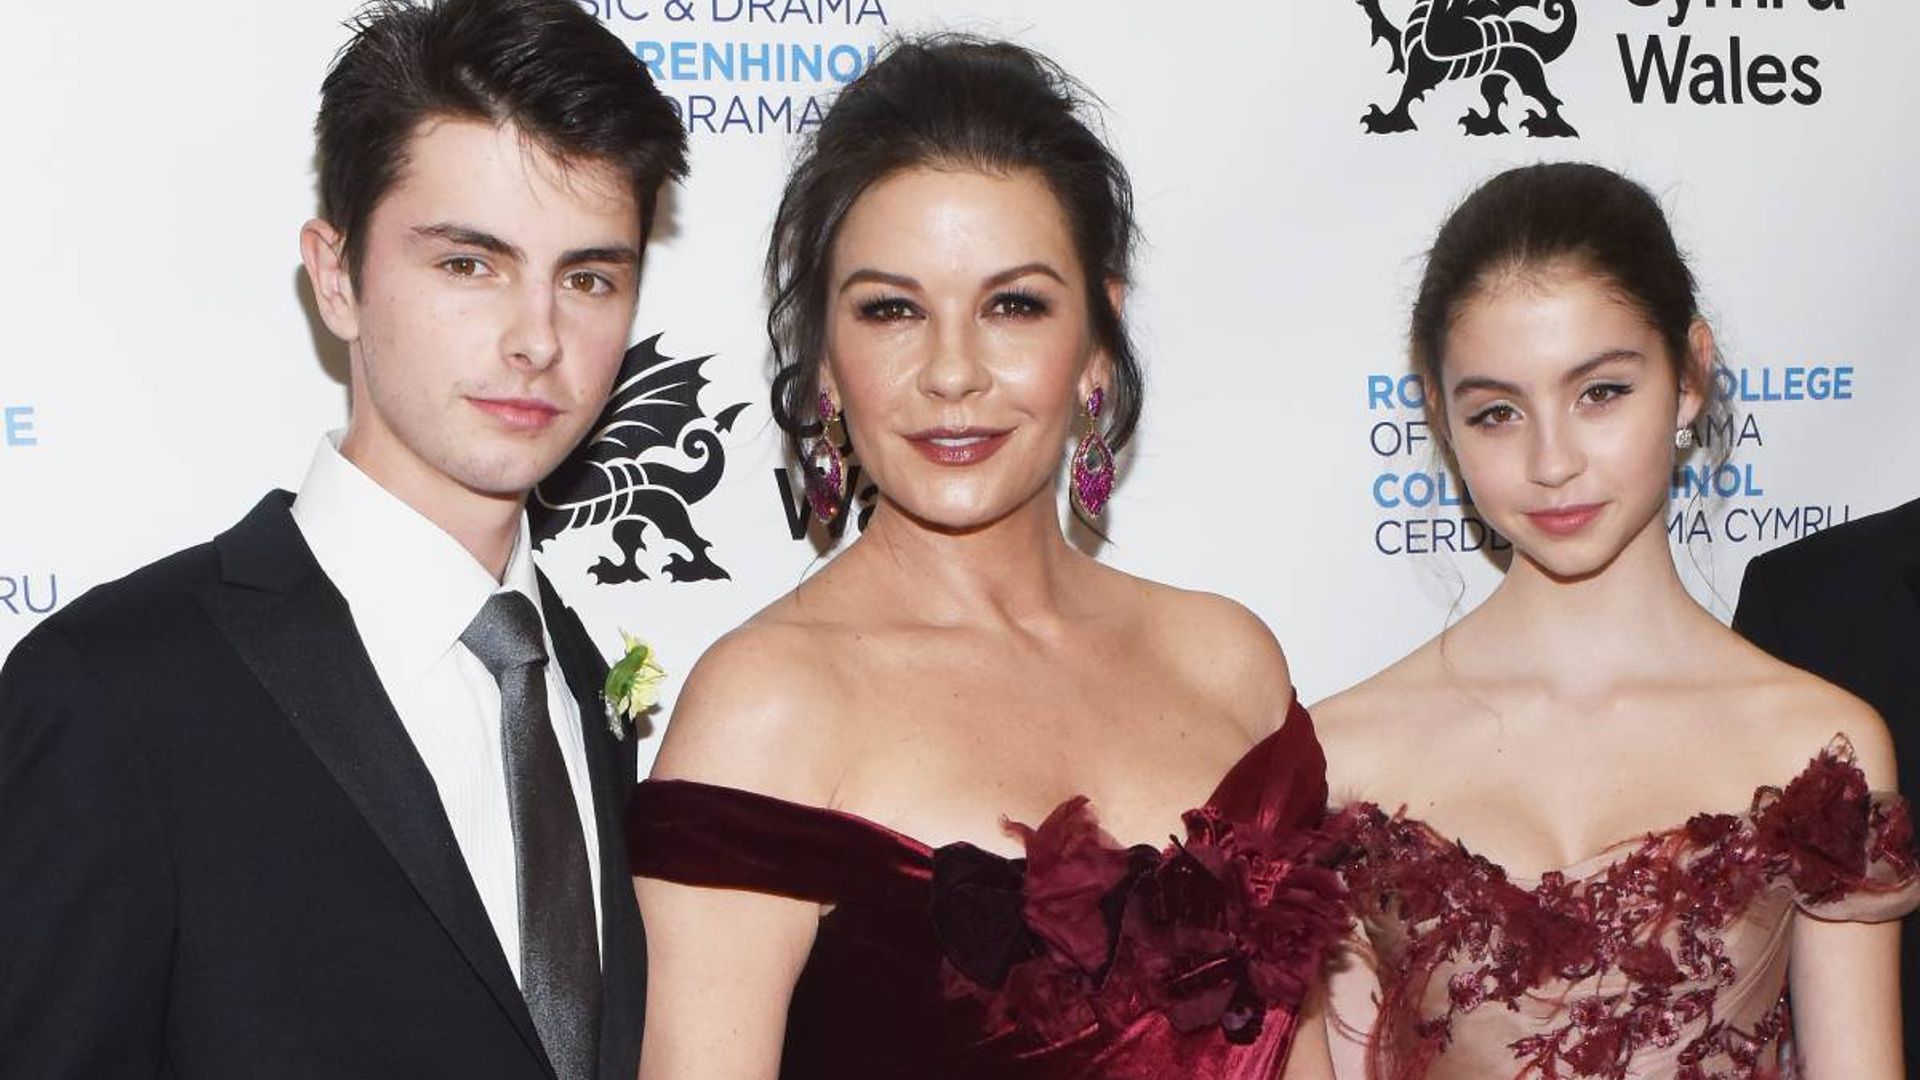 Catherine Zeta-Jones' son Dylan shares heartfelt message about his famous family